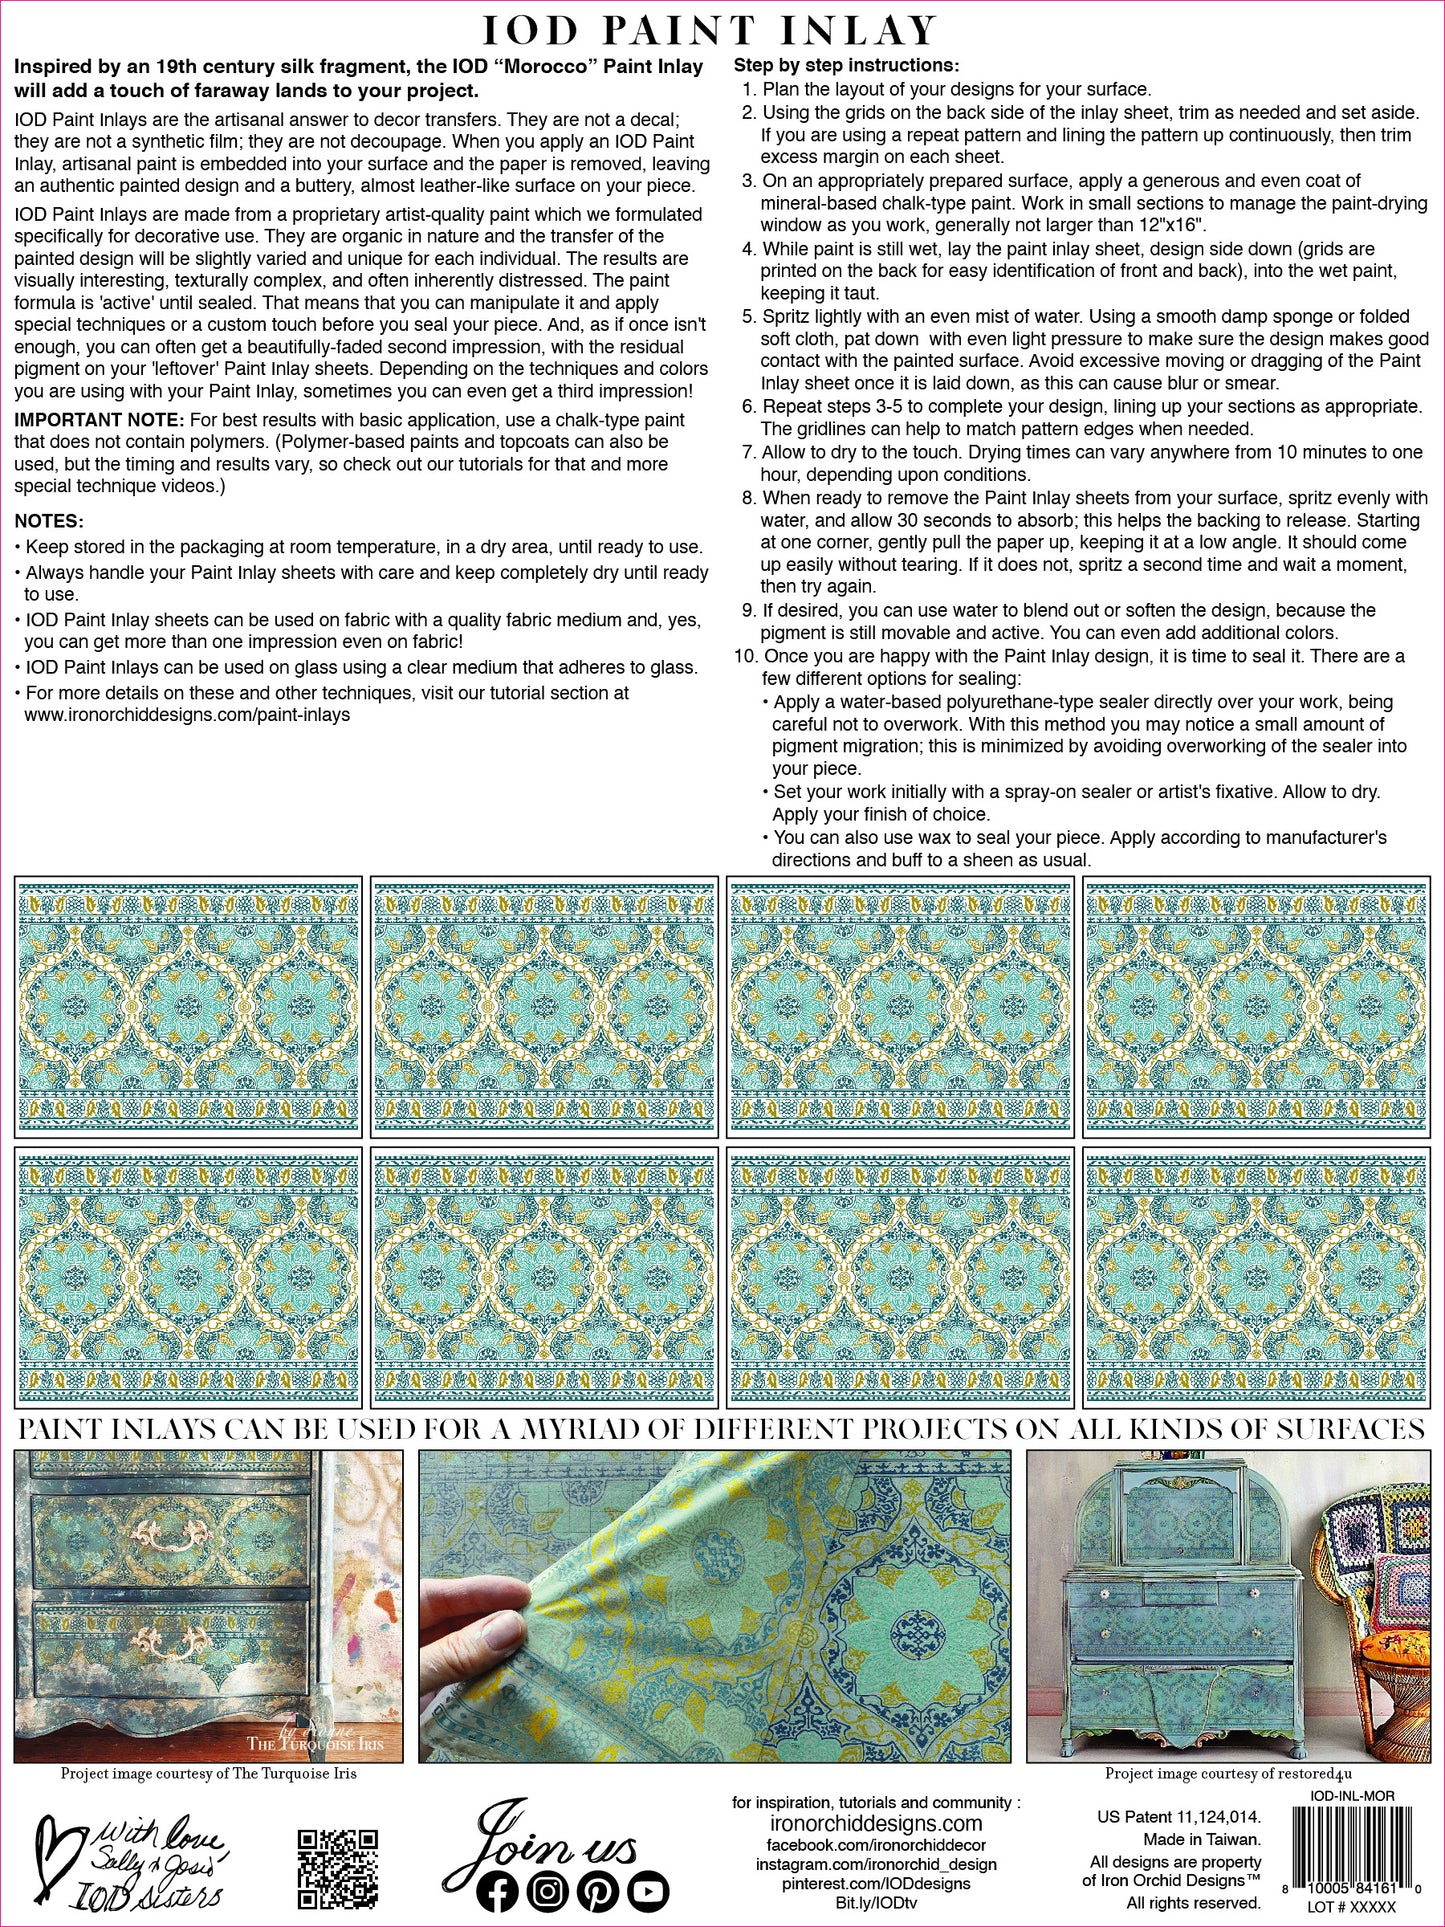 Morocco IOD Paint Inlay 8 Sheets - 12x16 Pad